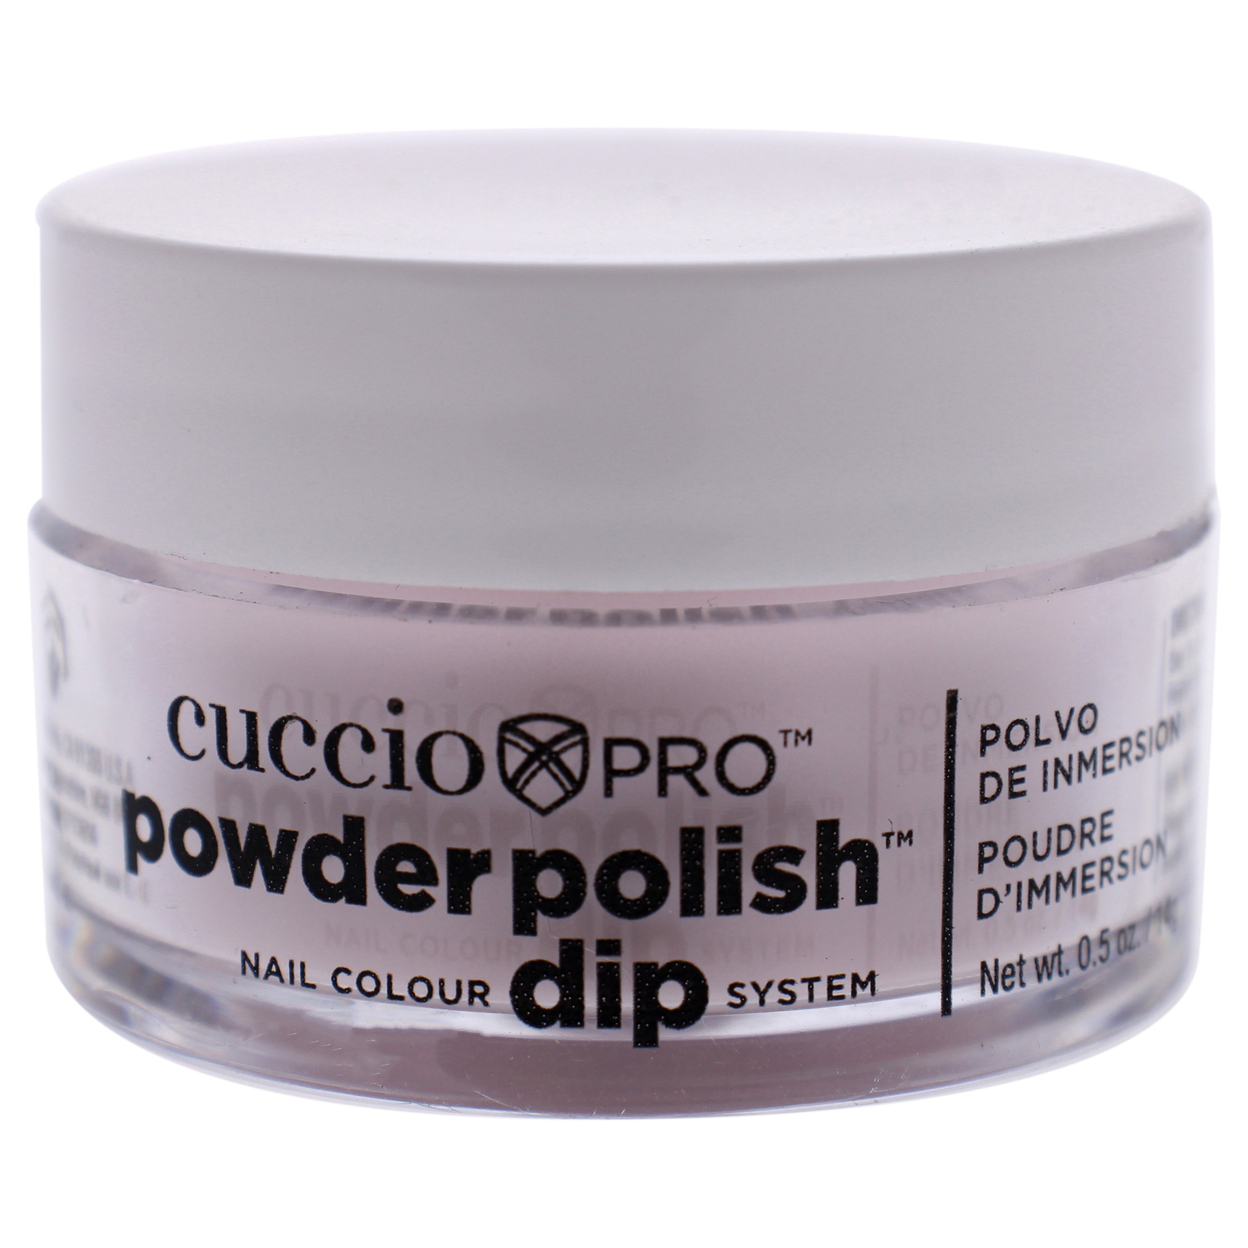 Cuccio Colour Pro Powder Polish Nail Colour Dip System - Original Pink Nail Powder 0.5 Oz